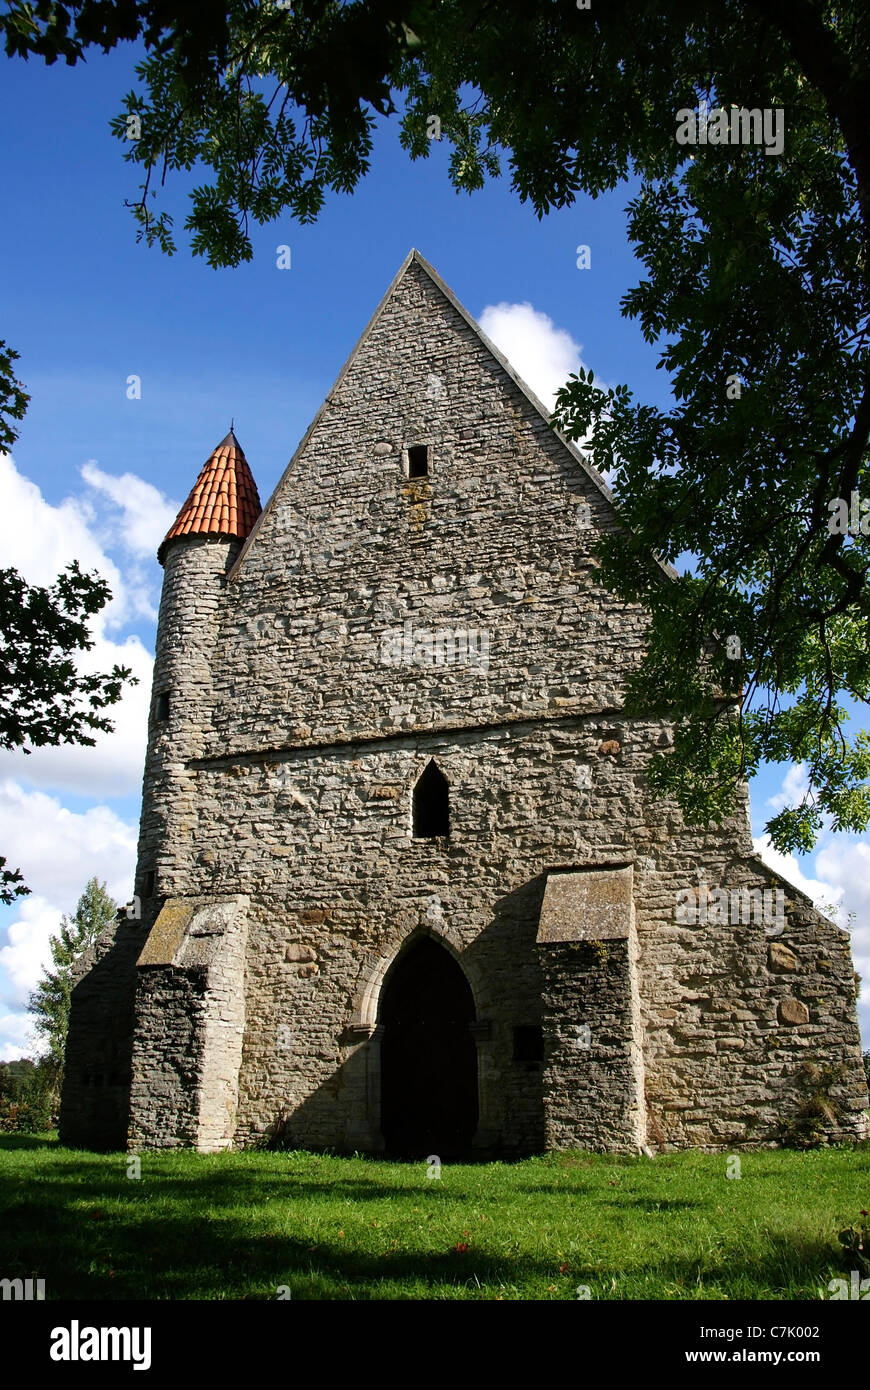 Alte Kapelle mit einem Turm des 18. Jahrhunderts Stockfoto